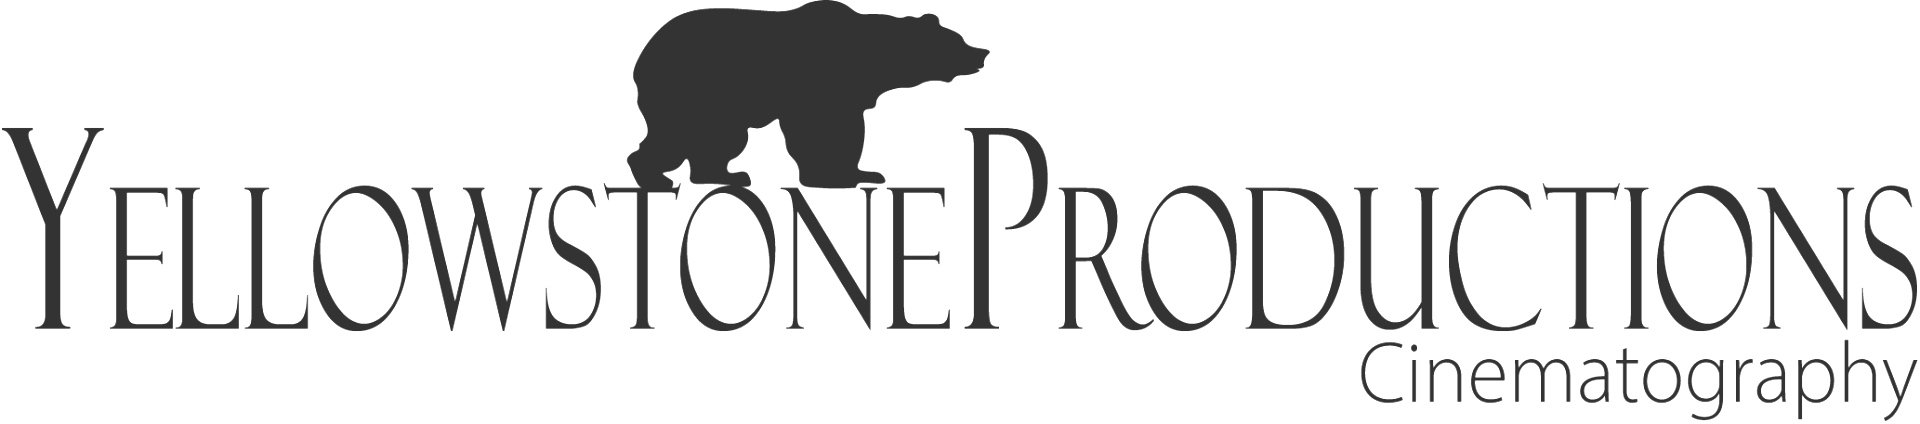 Yellowstone Productions